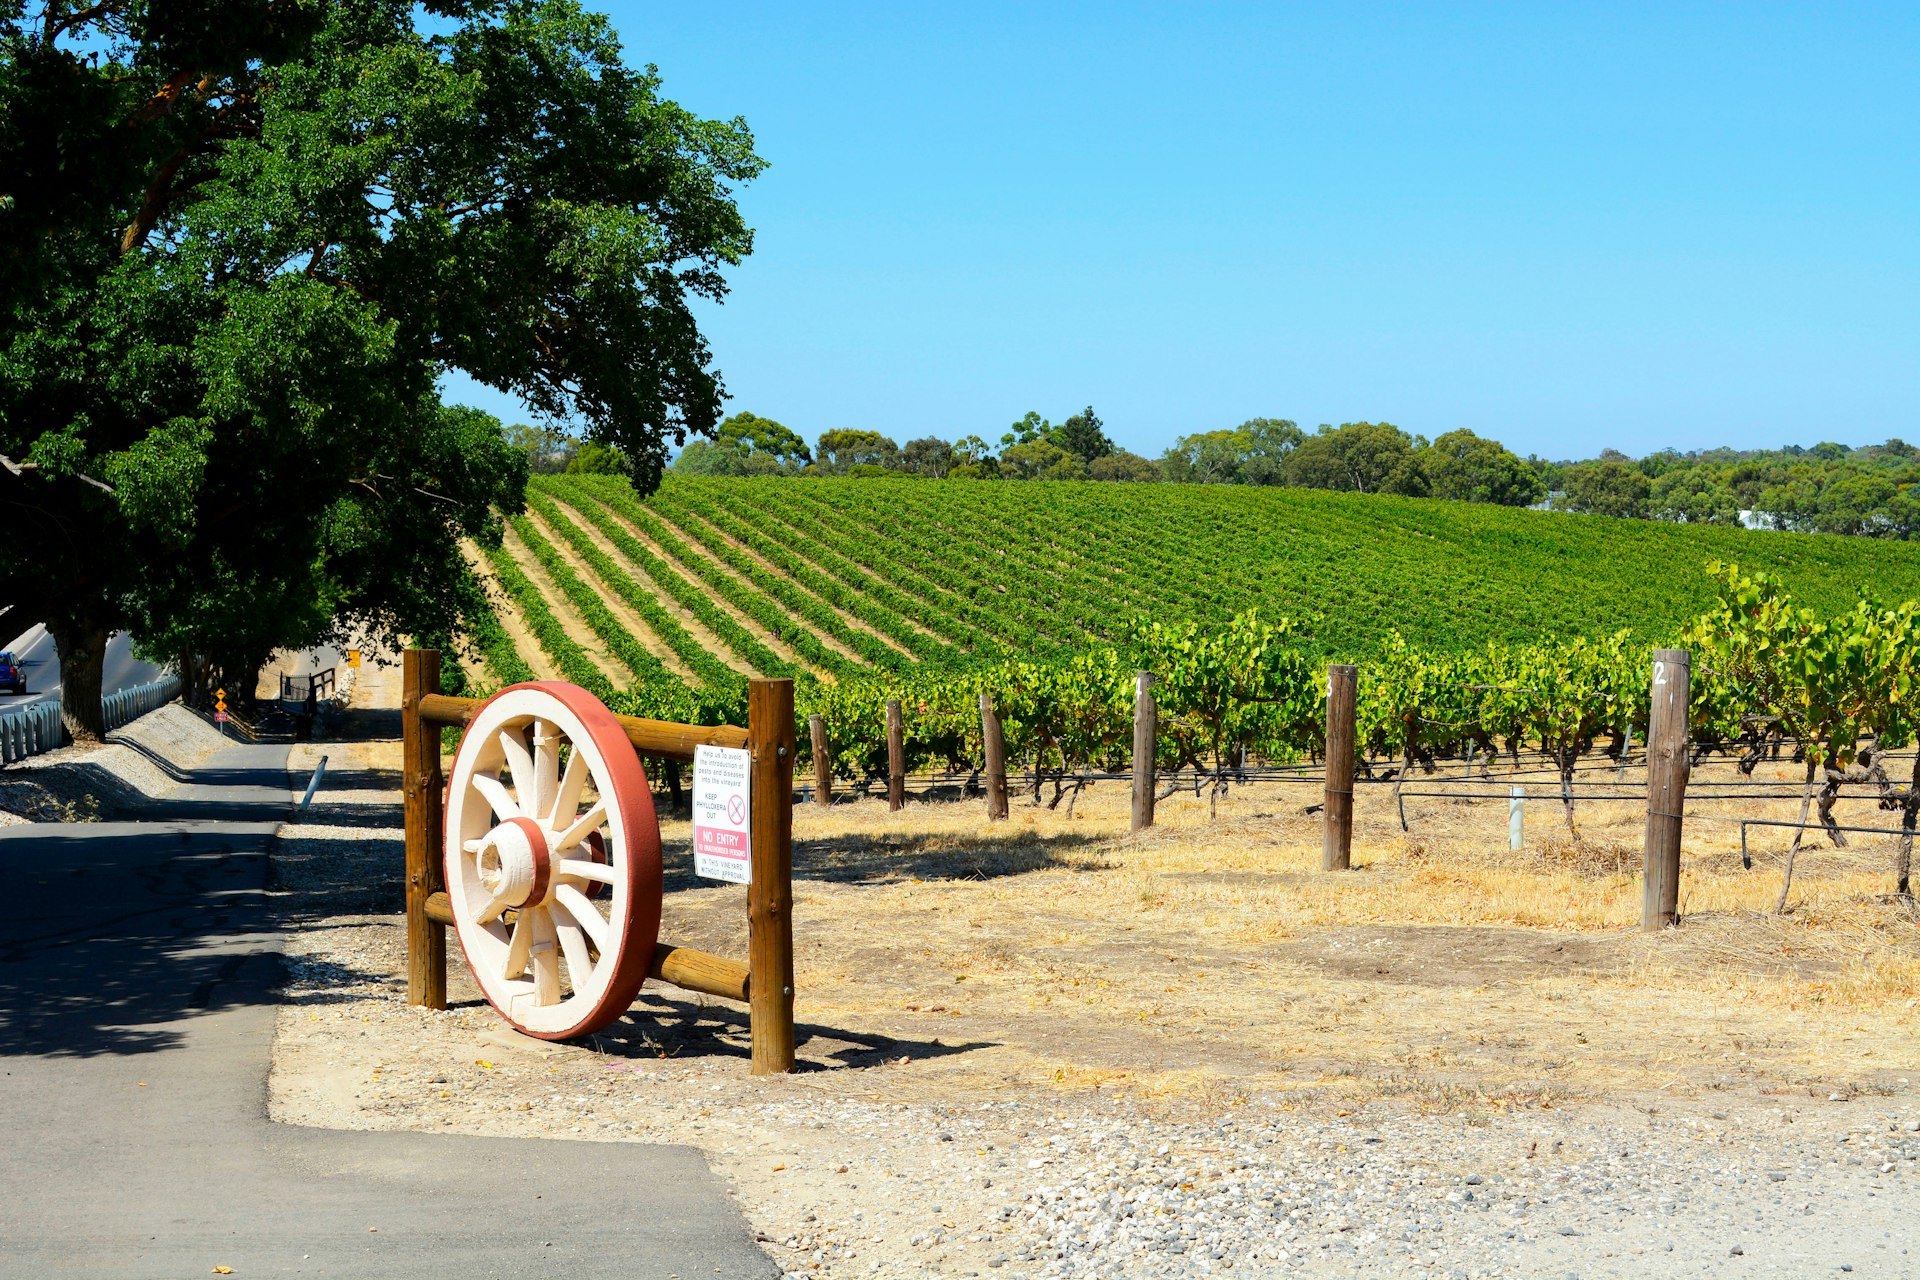 Rows of grape vines with wagen wheel gate, in Australia's major wine growing regiion, Barossa Valley South Australia.